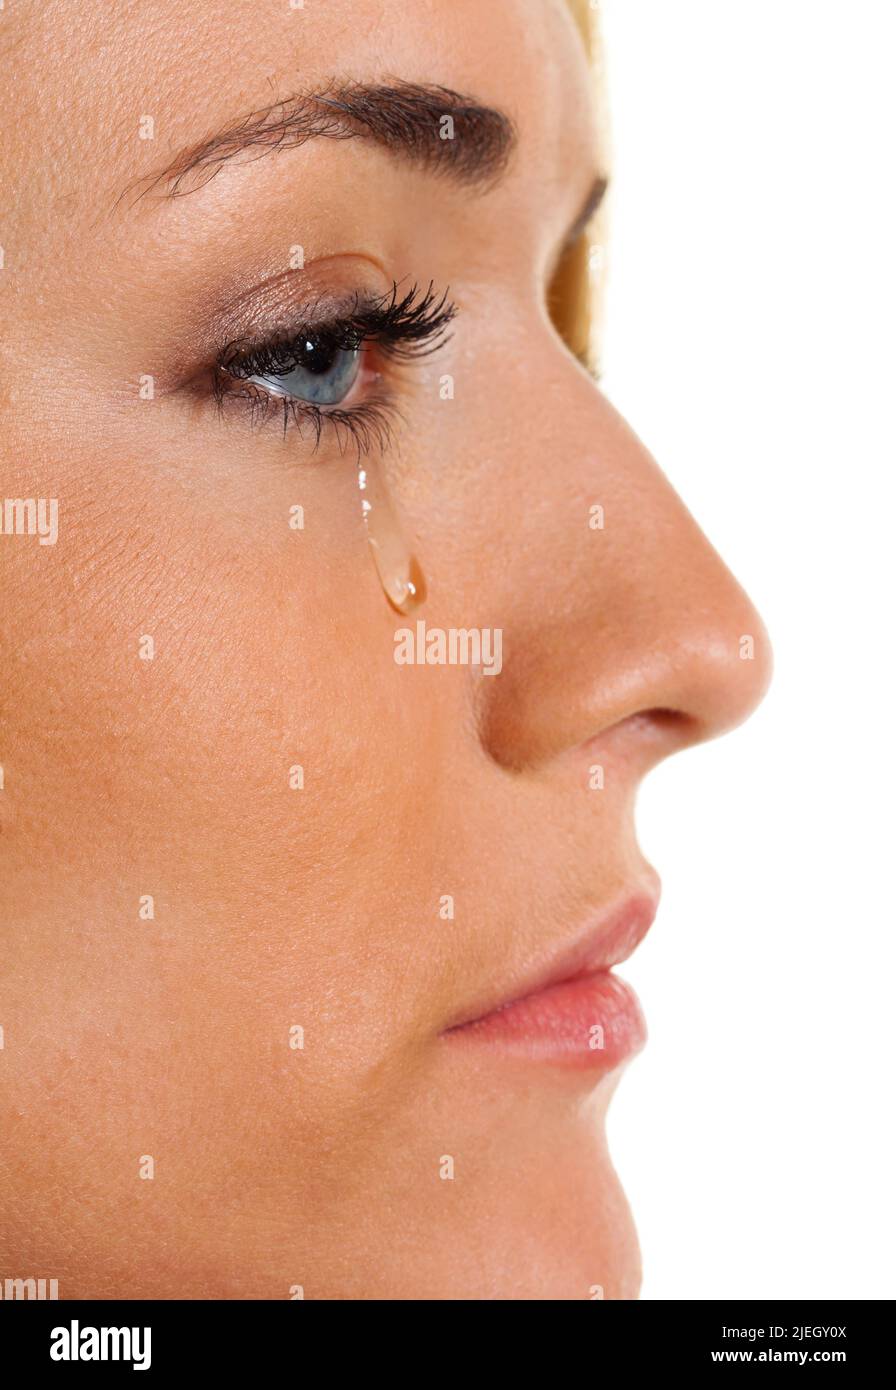 Eine traurige Frau weint Tr‰ne. Symbolphoto Angst, Gewalt, Depression Stock Photo